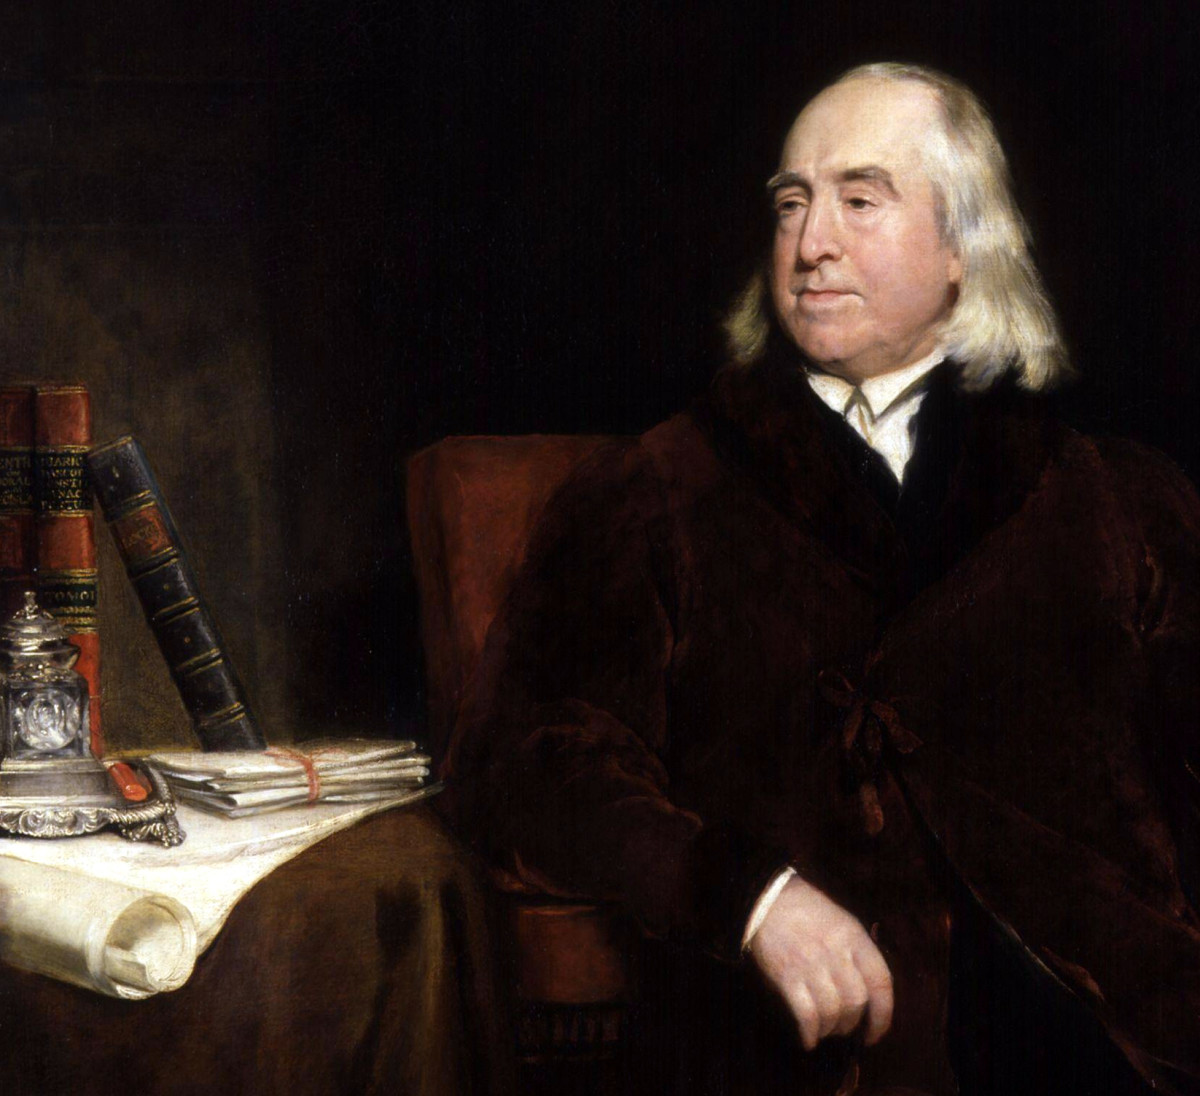 Jeremy Bentham (15 February 1748 – 6 June 1832)